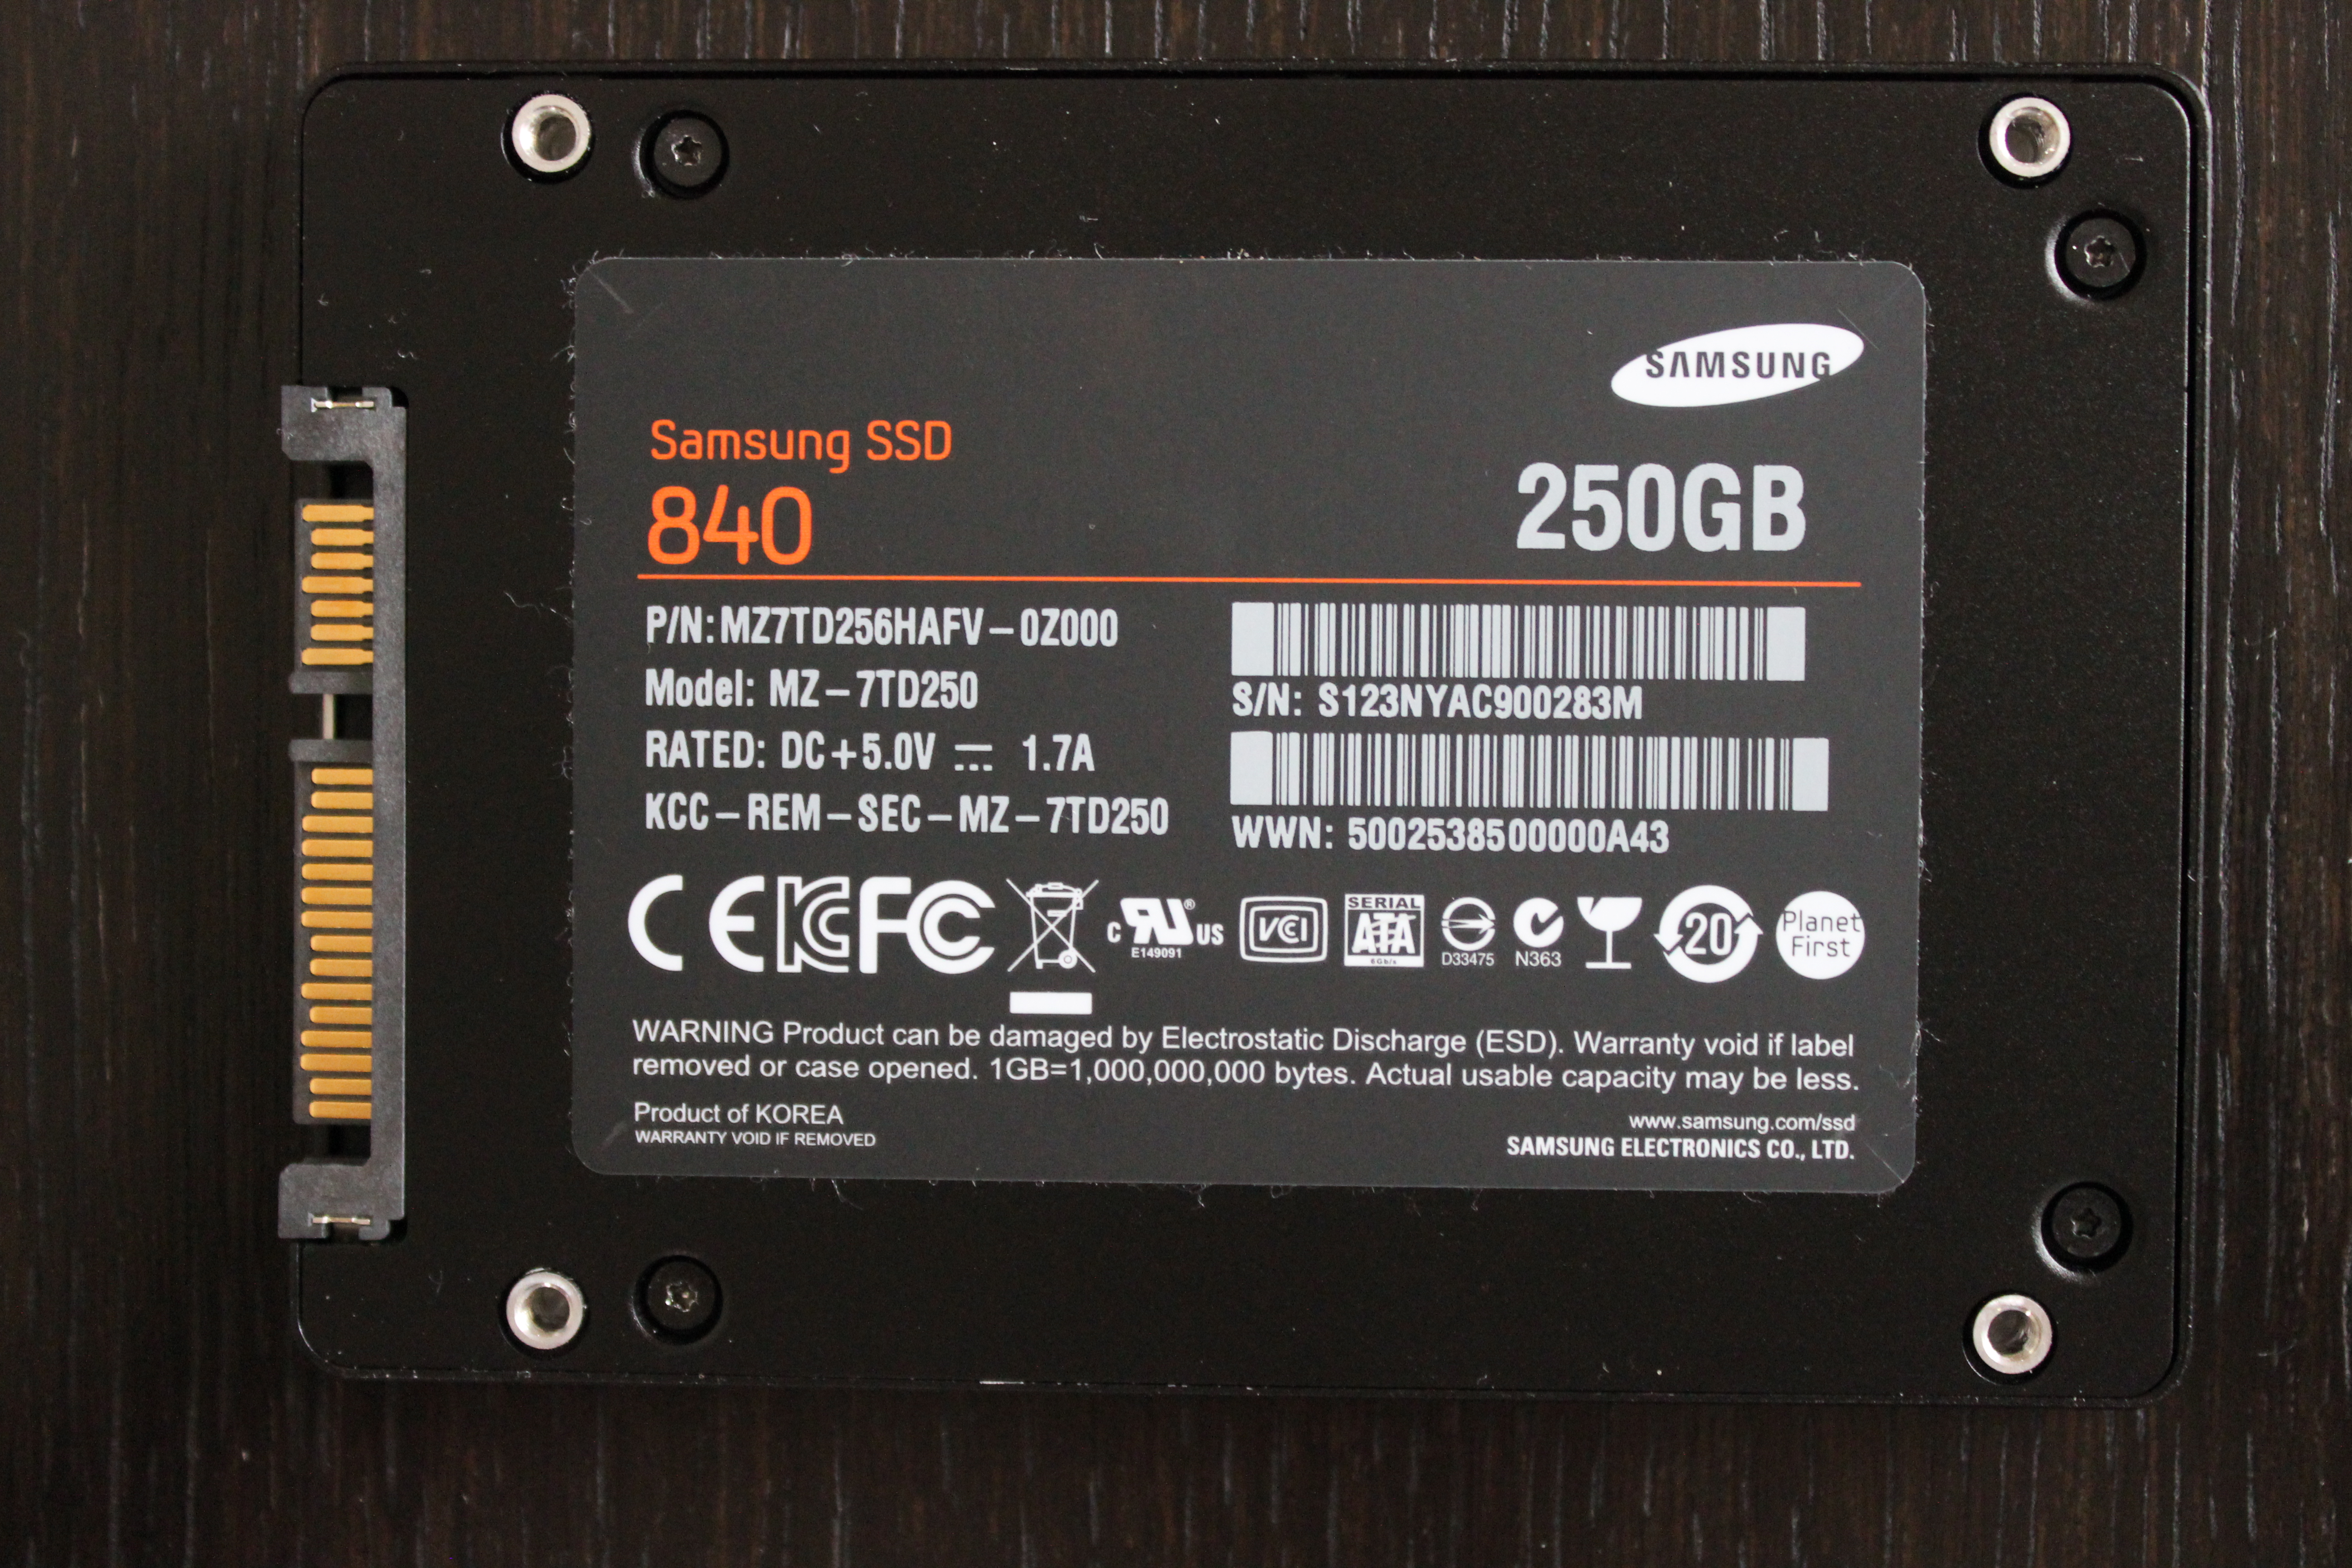 Samsung SSD 840 Samsung SSD (250GB) Review